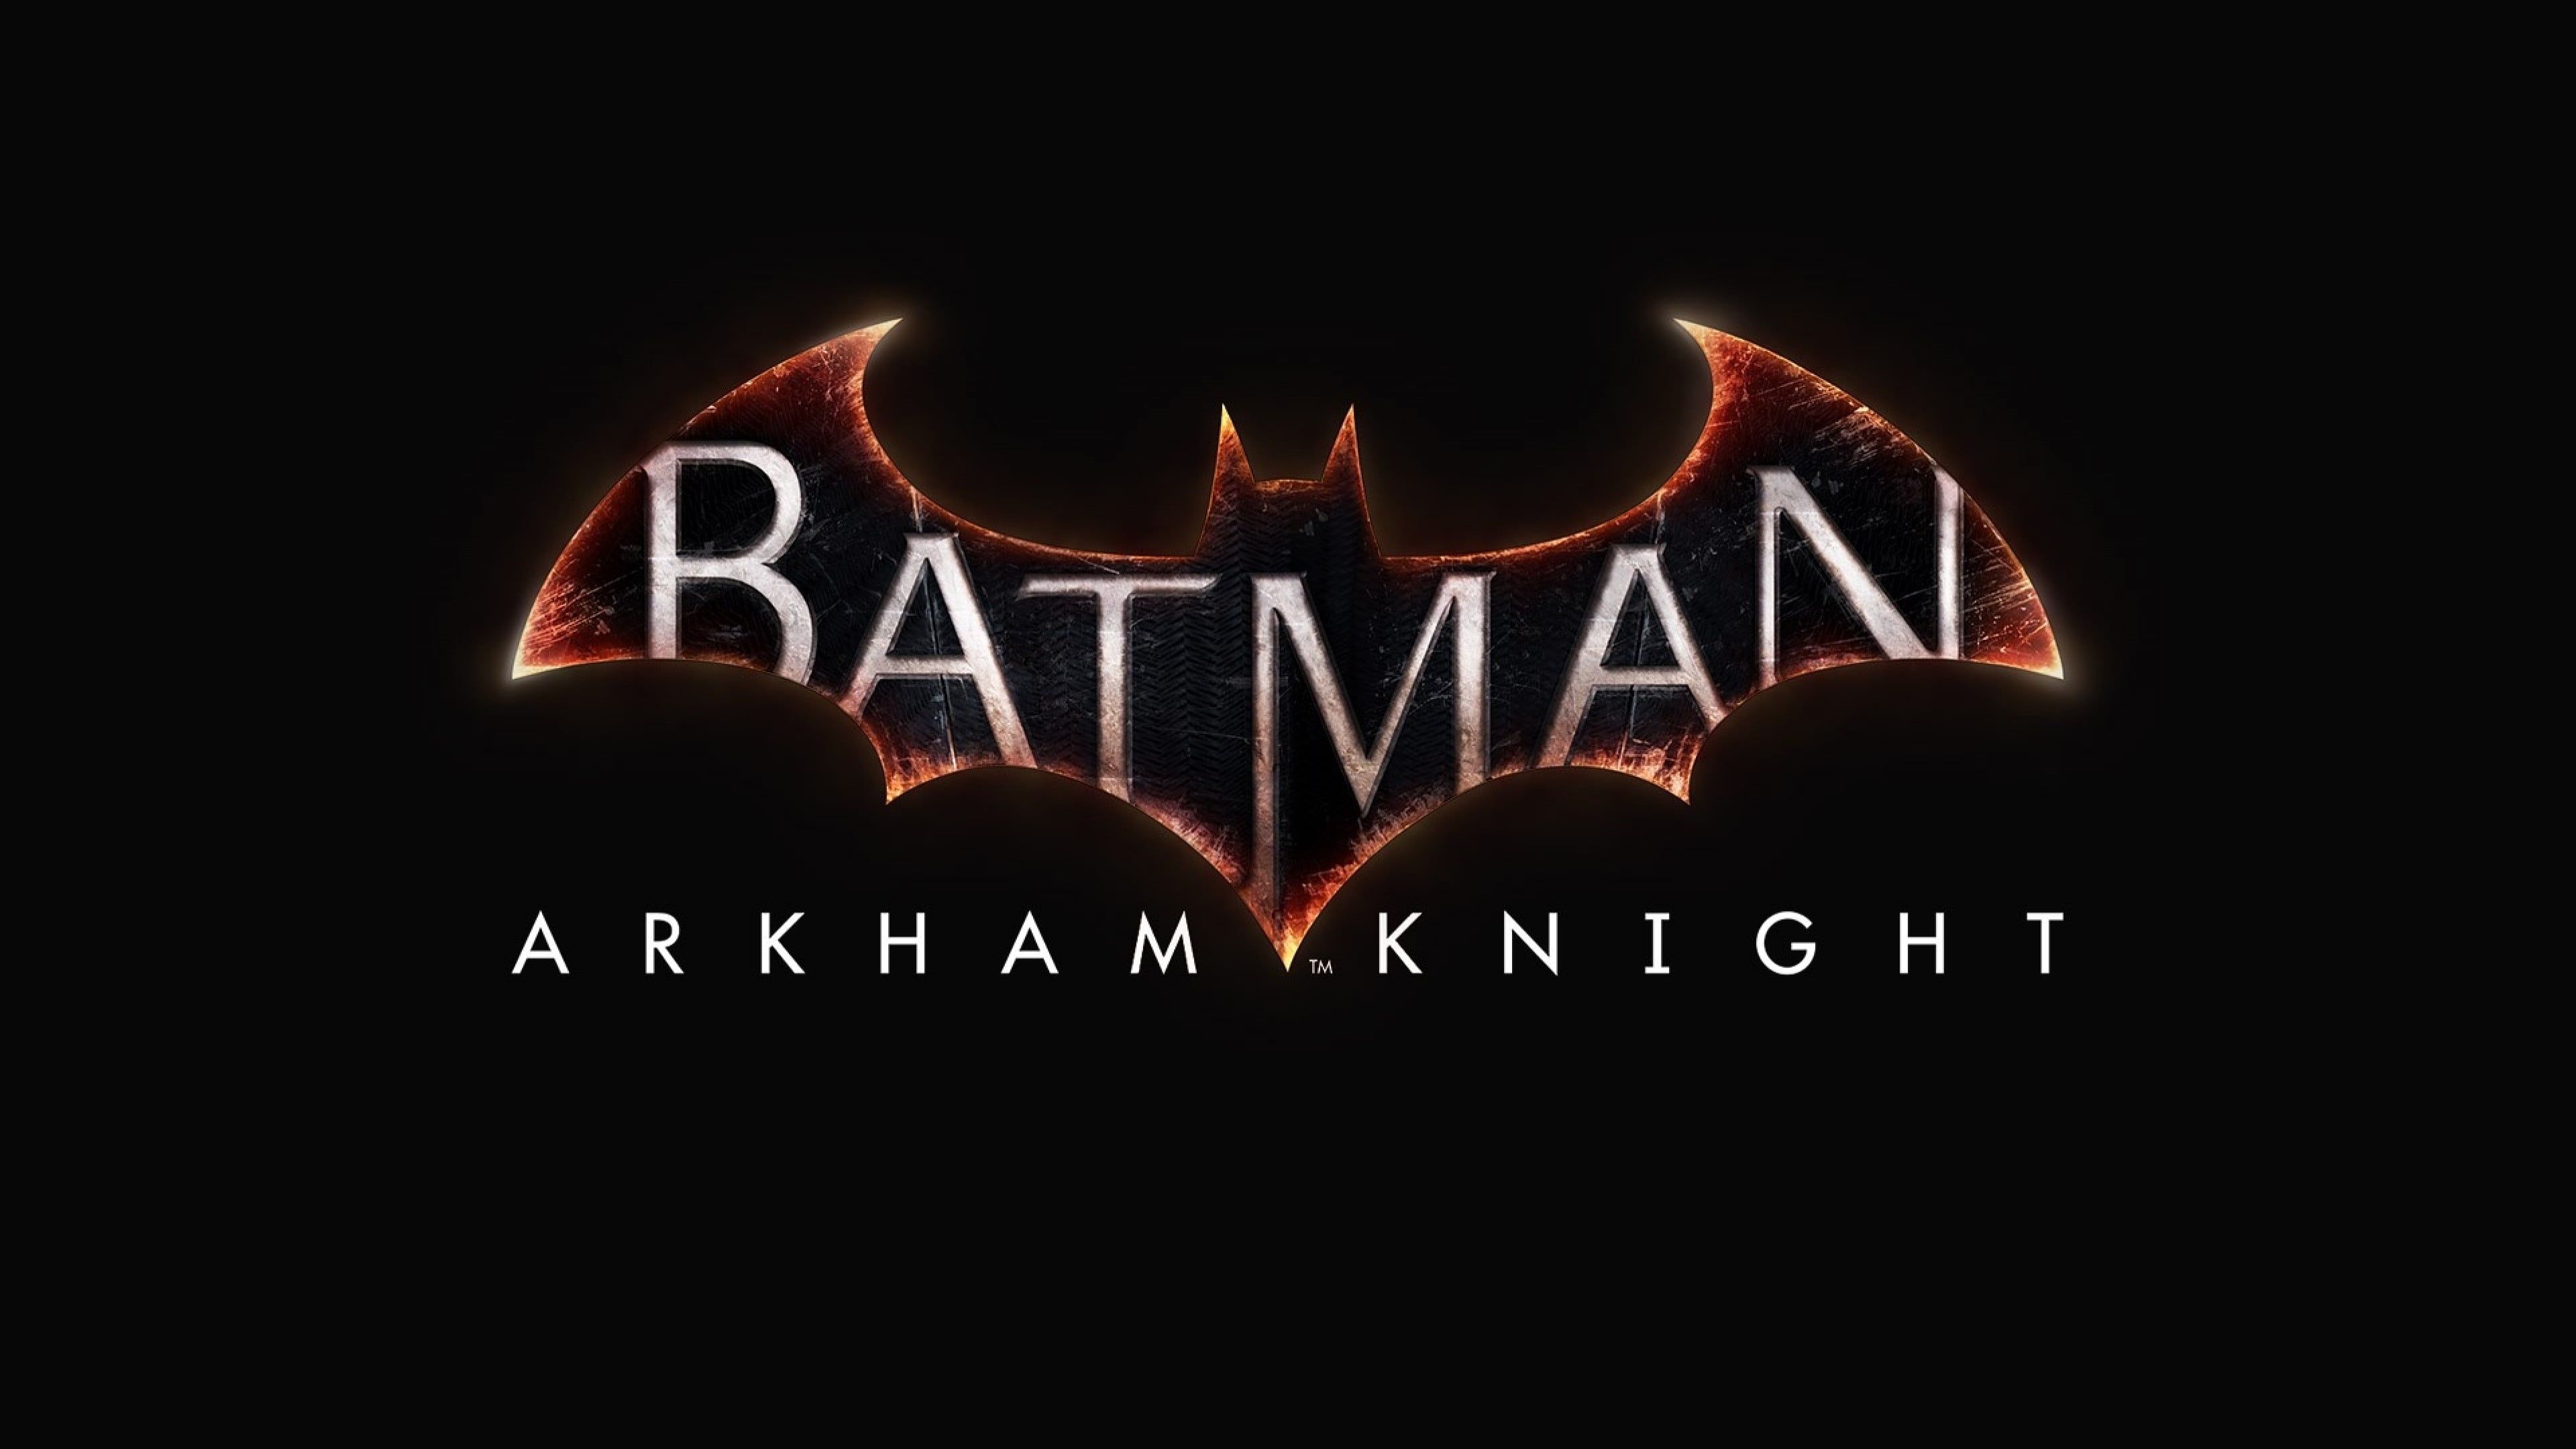 Batman Arkham Knight digital wallpaper, Batman: Arkham Knight, Rocksteady Studios, Batman, Gotham City